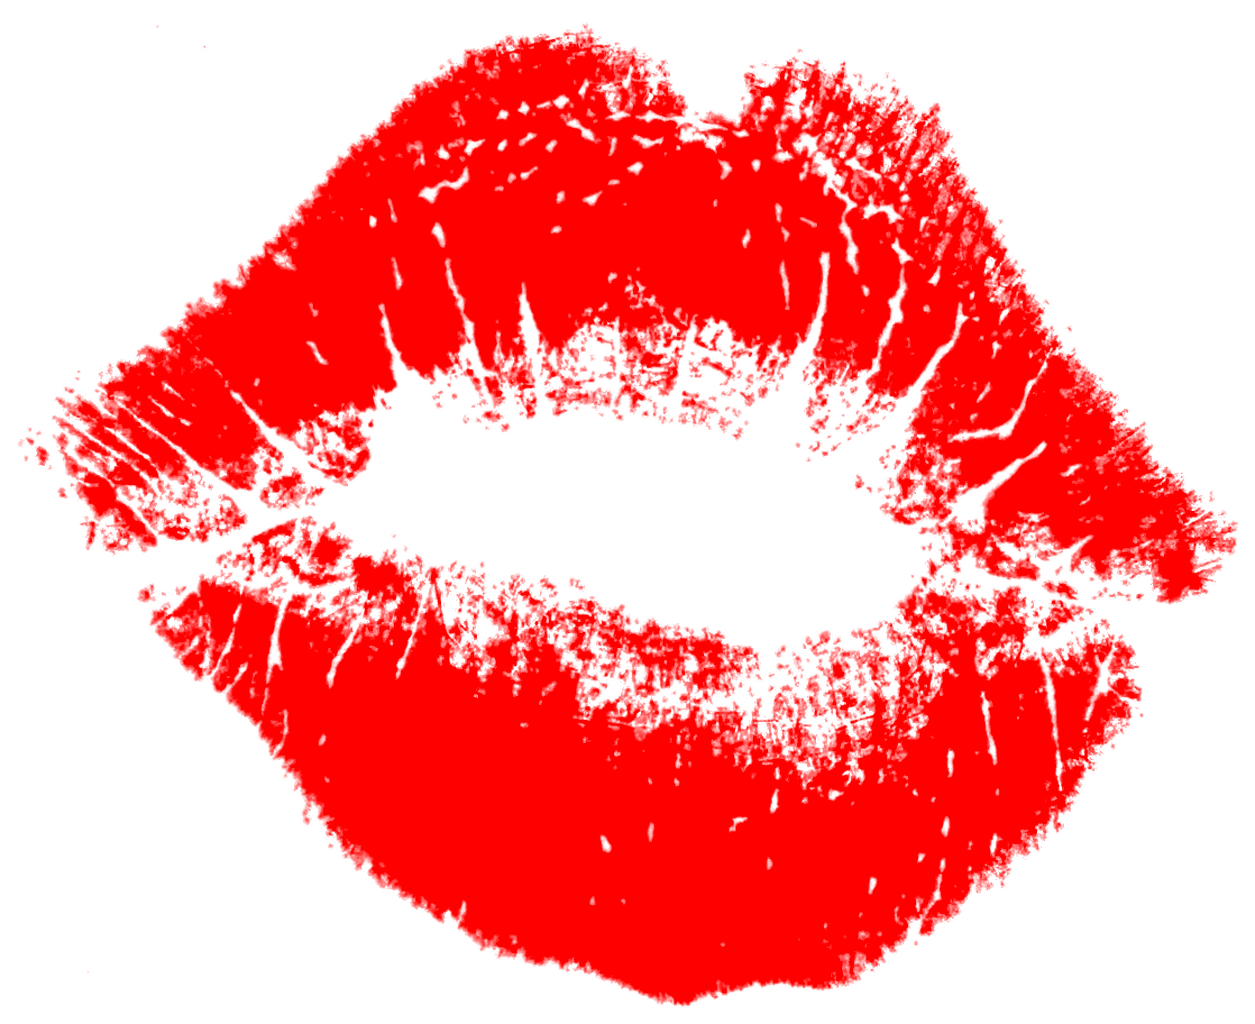 Lips Png Image PNG Image